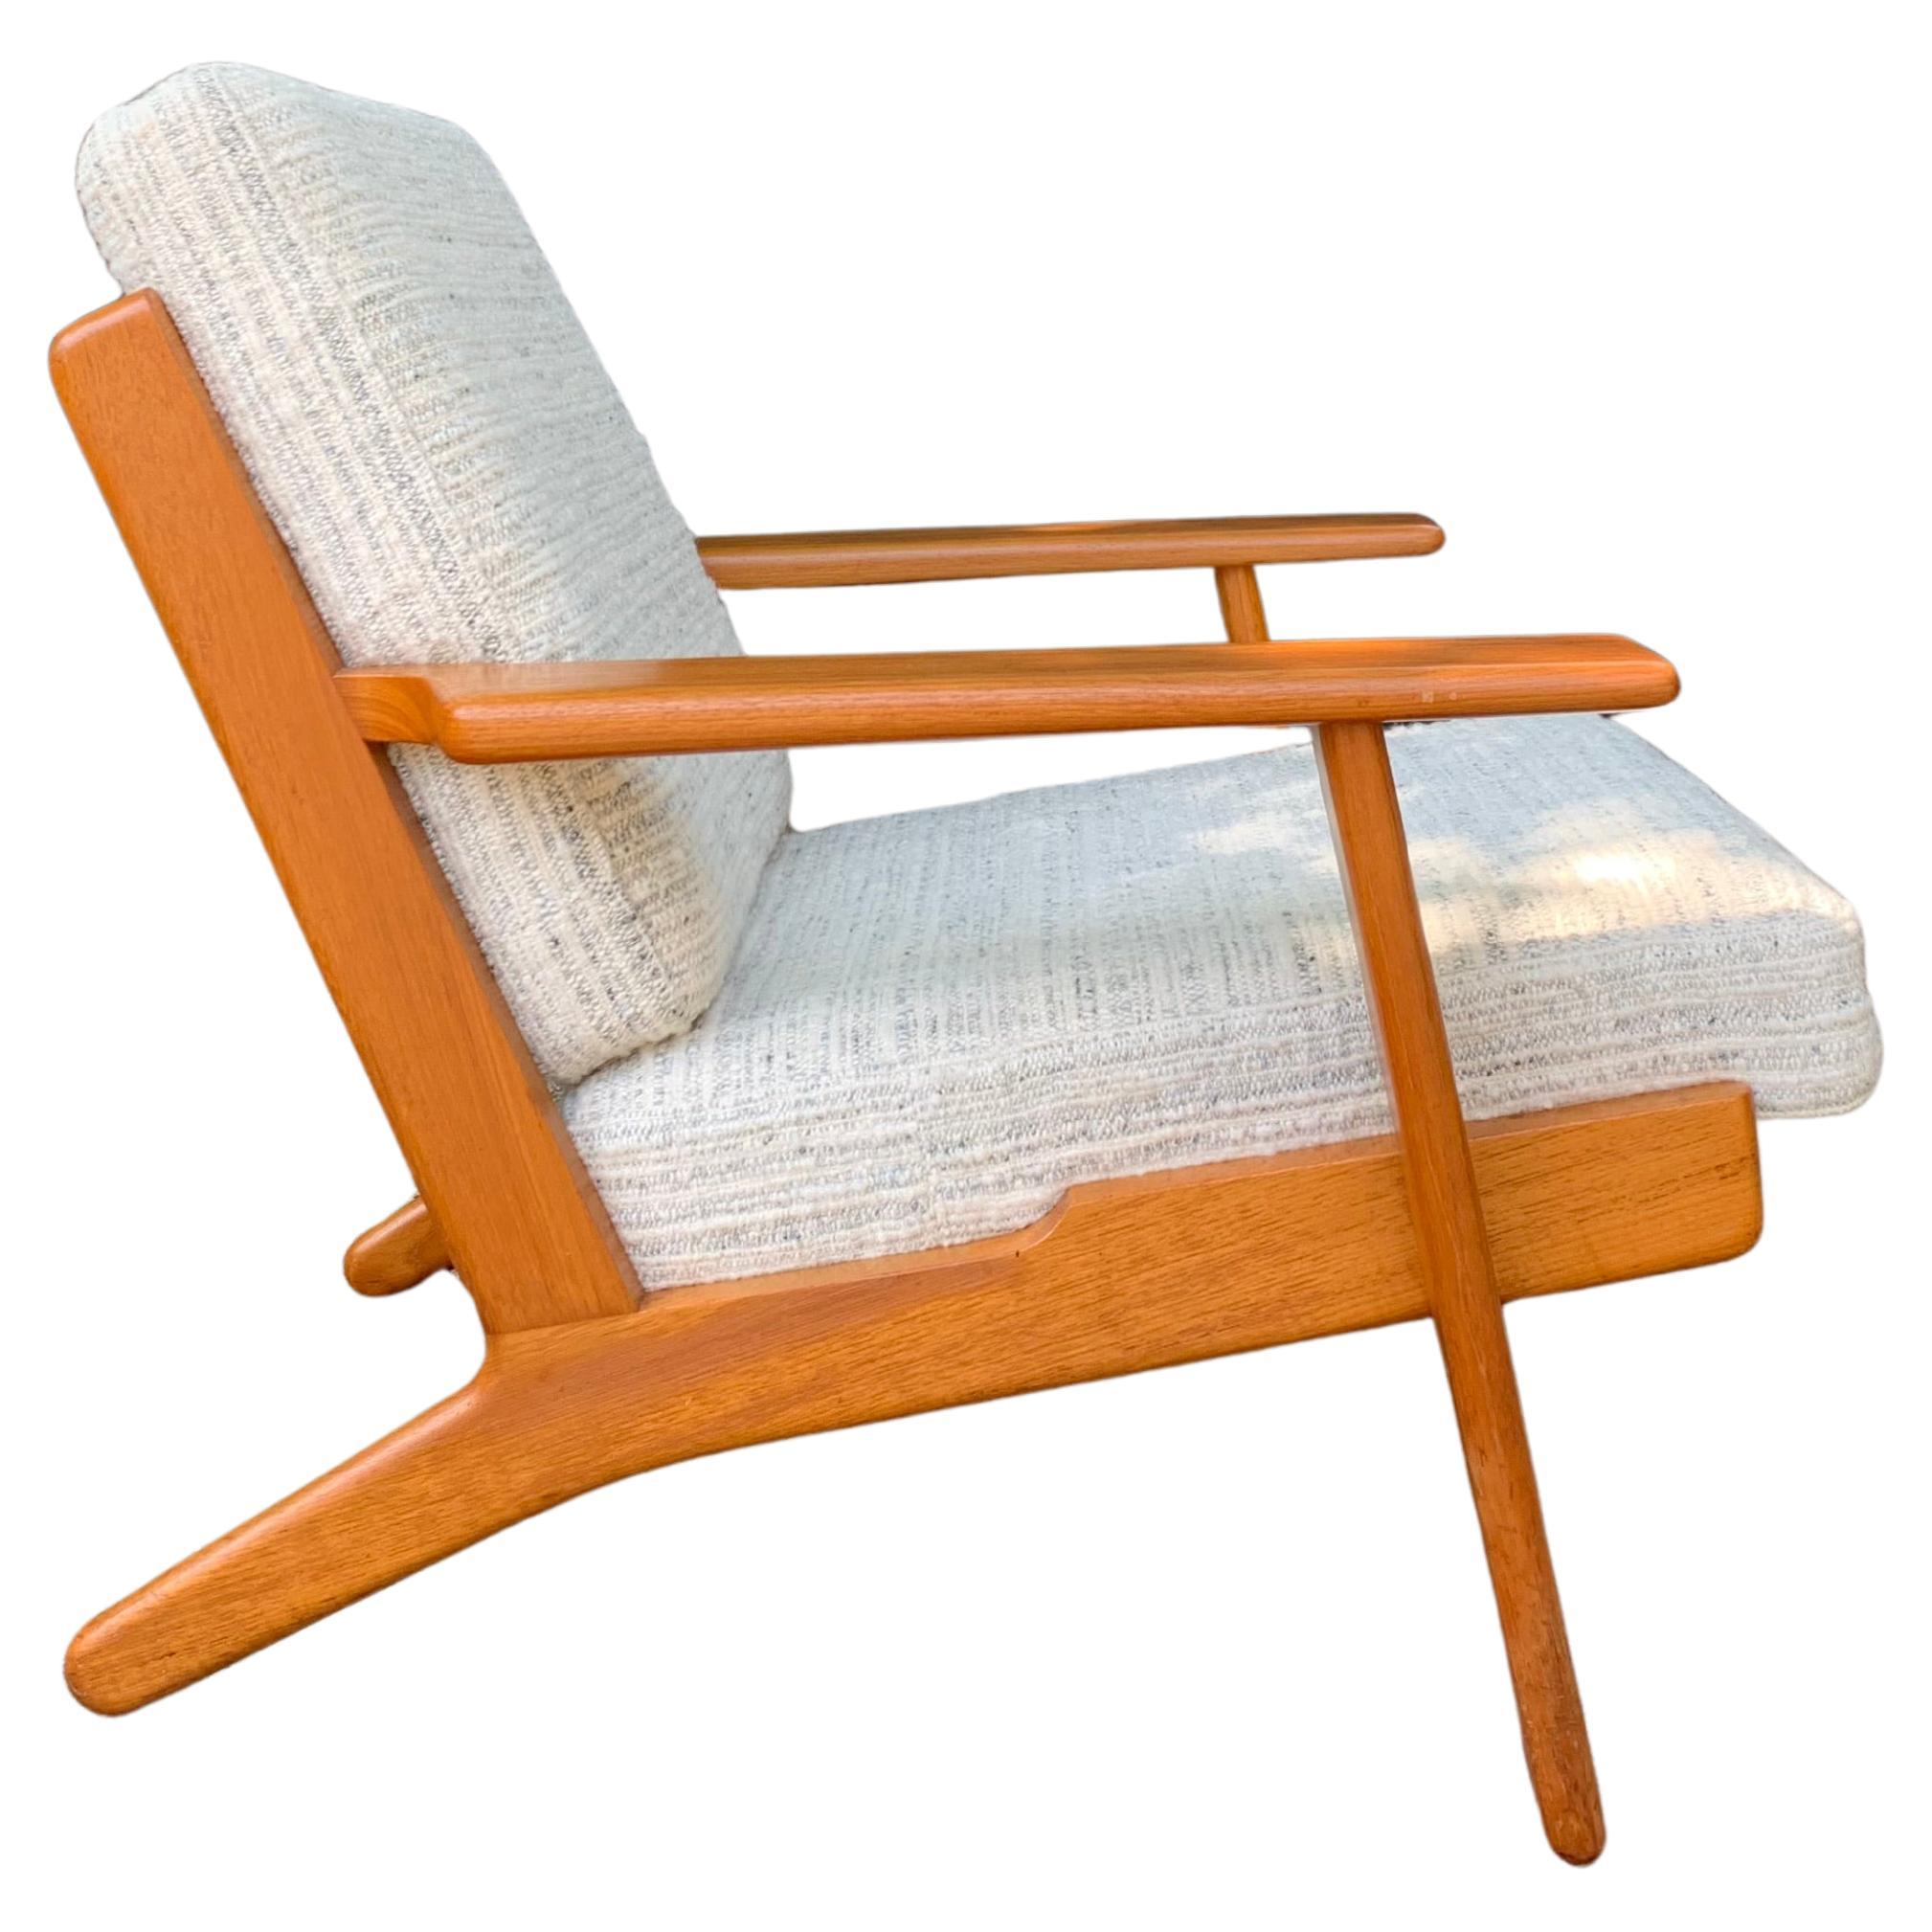 Are Hans Wegner chairs comfortable?